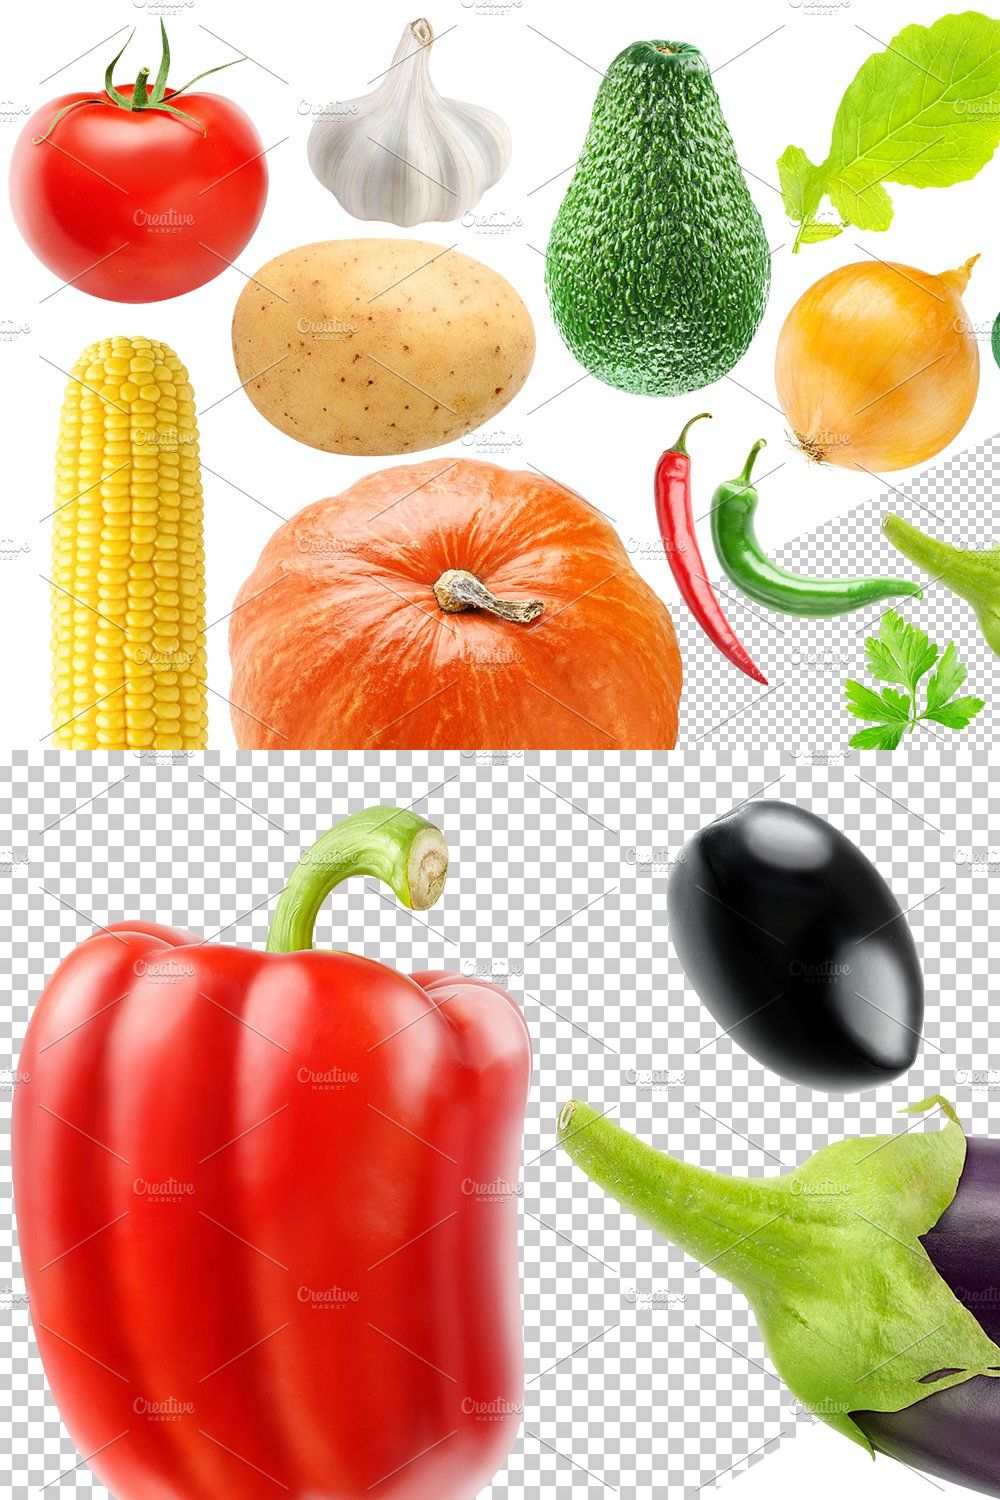 20 fresh vegetables pinterest preview image.